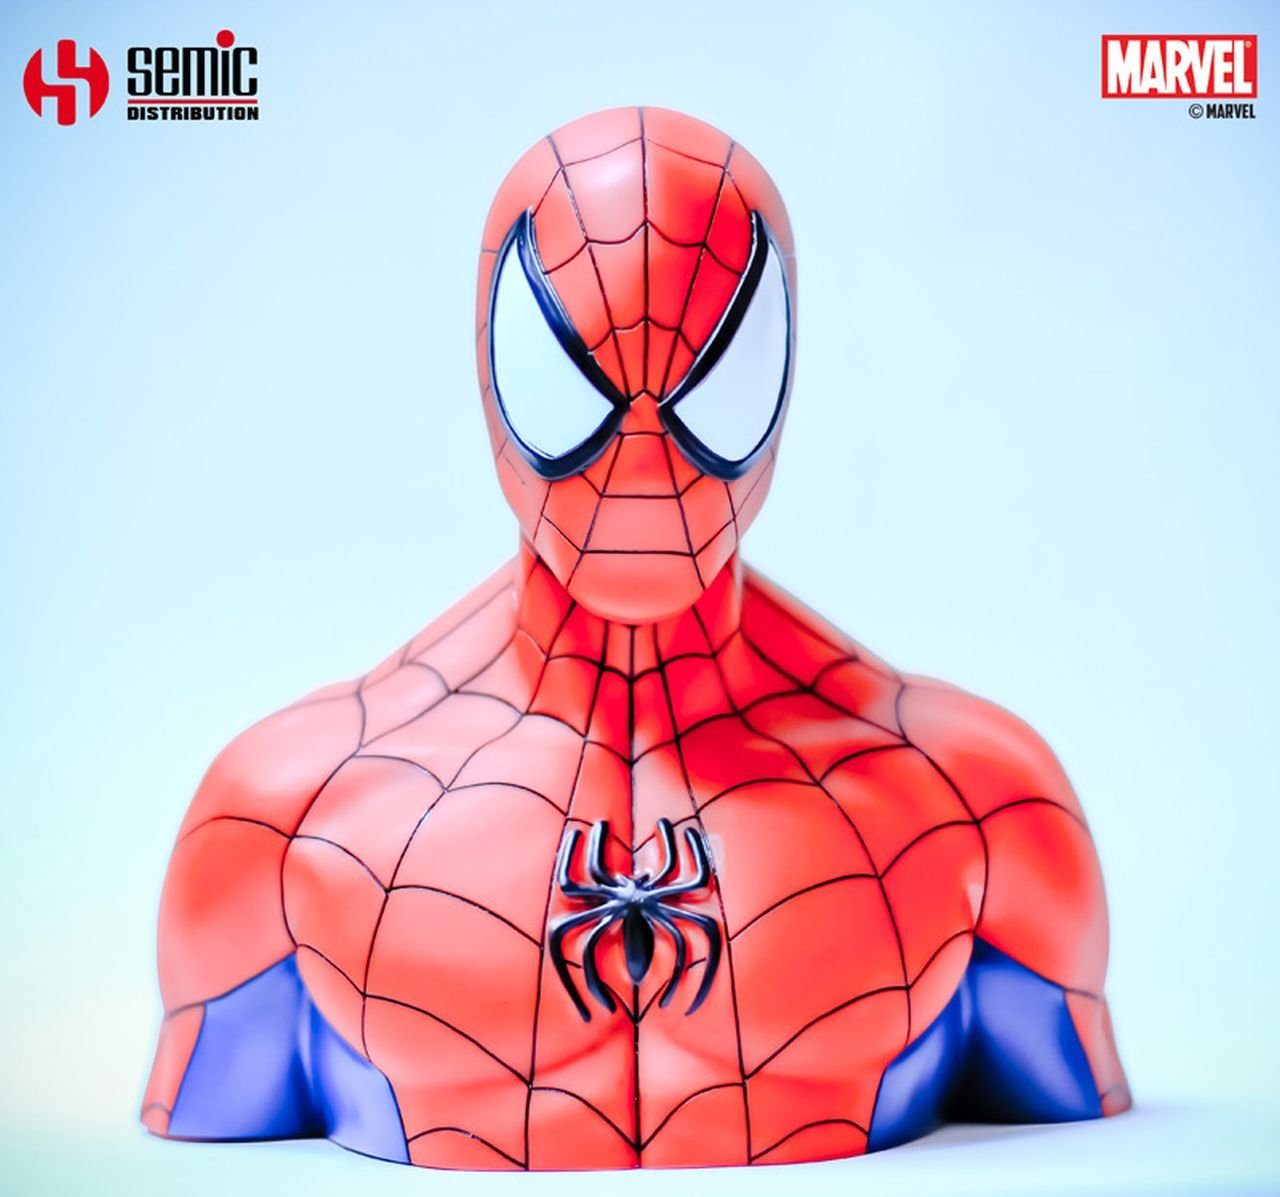 SEMIC Spardose Marvel Comics Spardose Spider-Man 17 cm